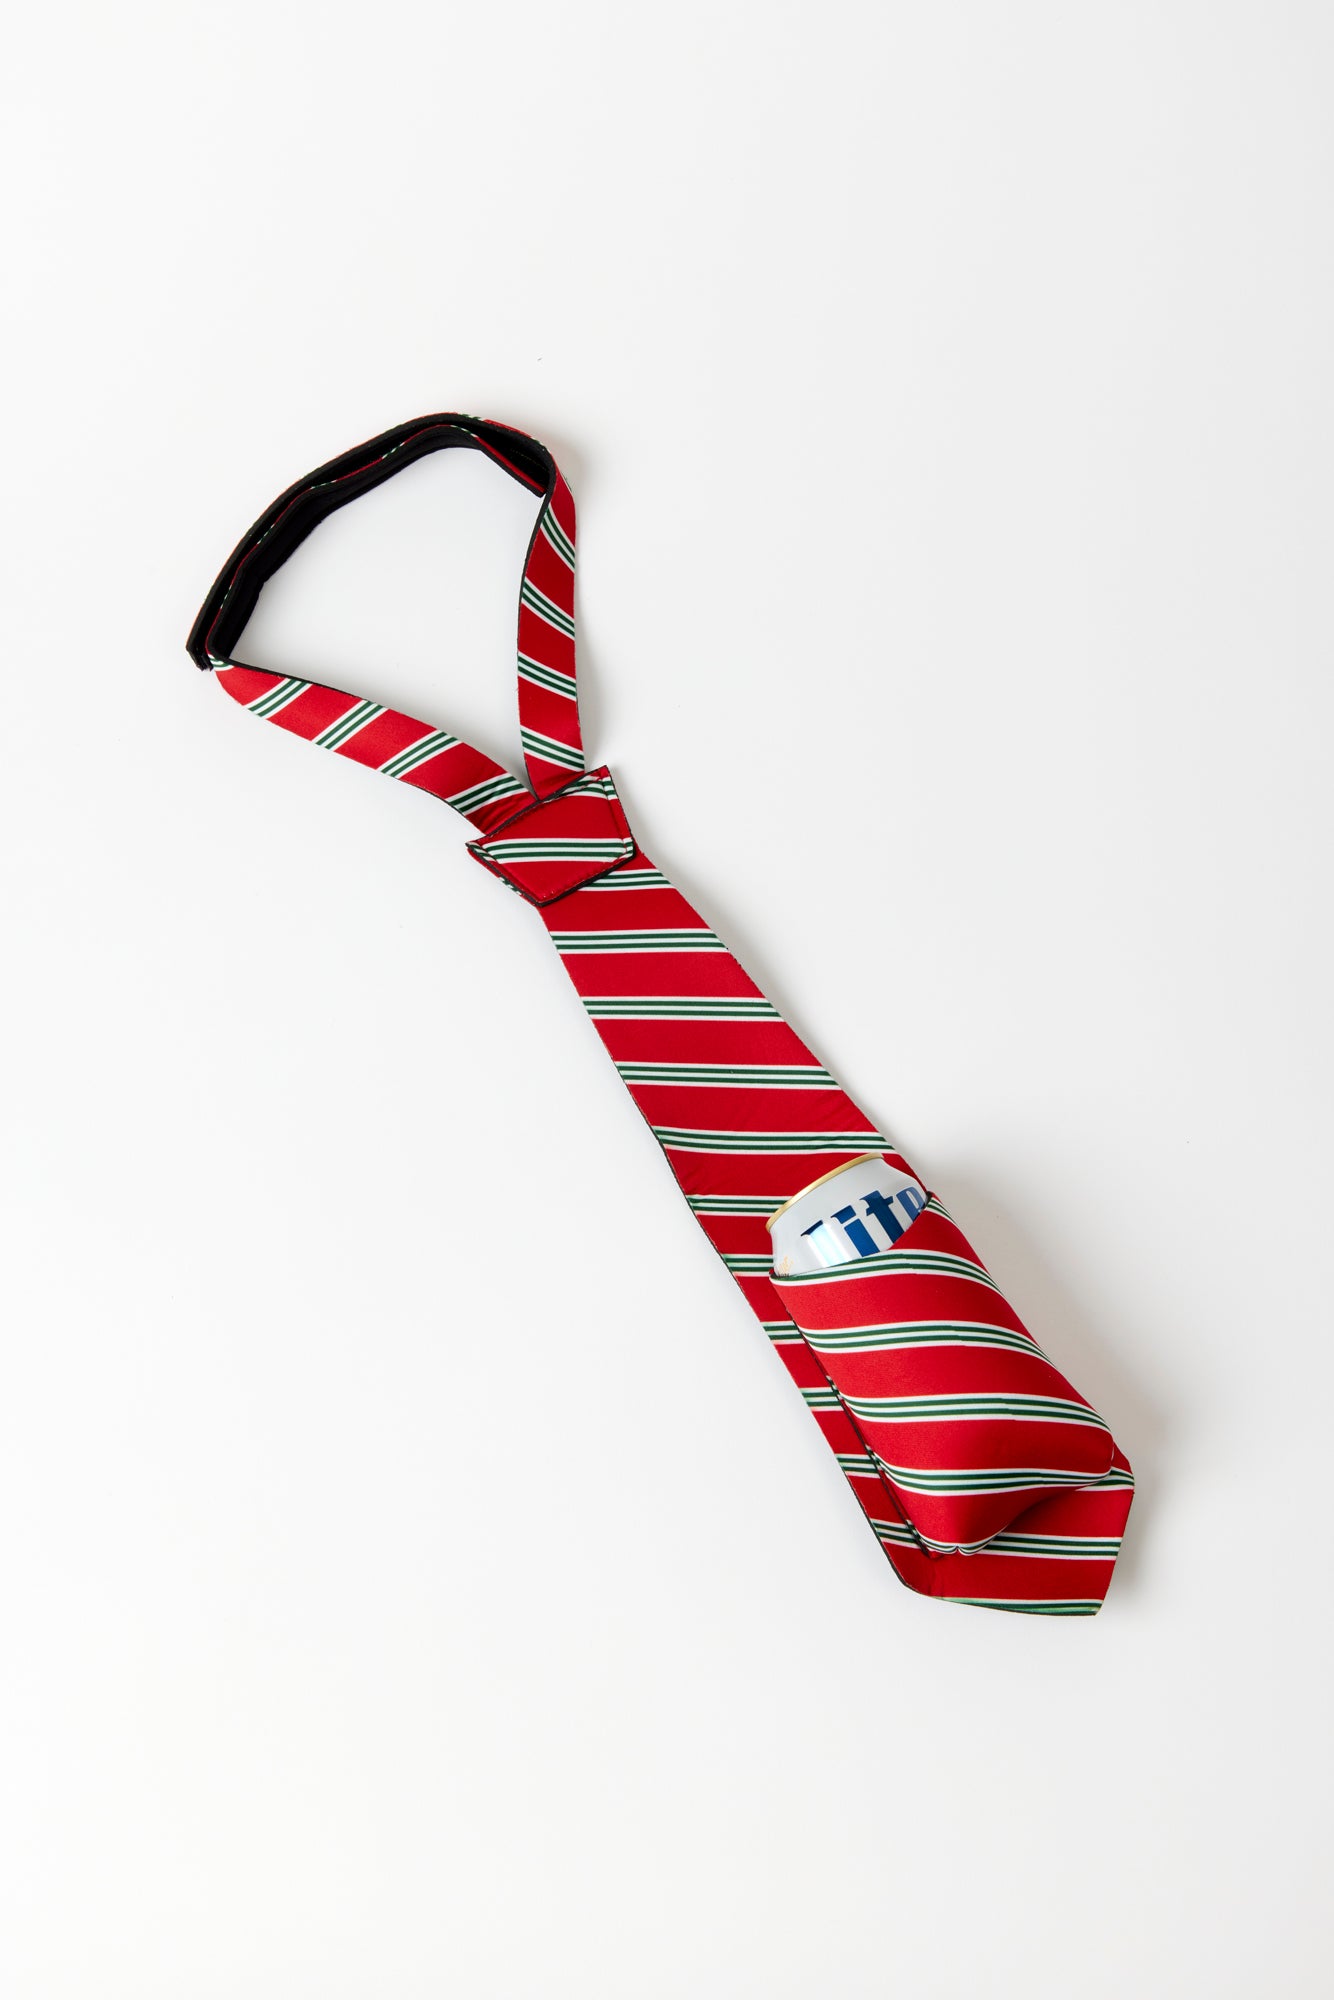 Collegiate Striped Repp Tie in Blue and Red